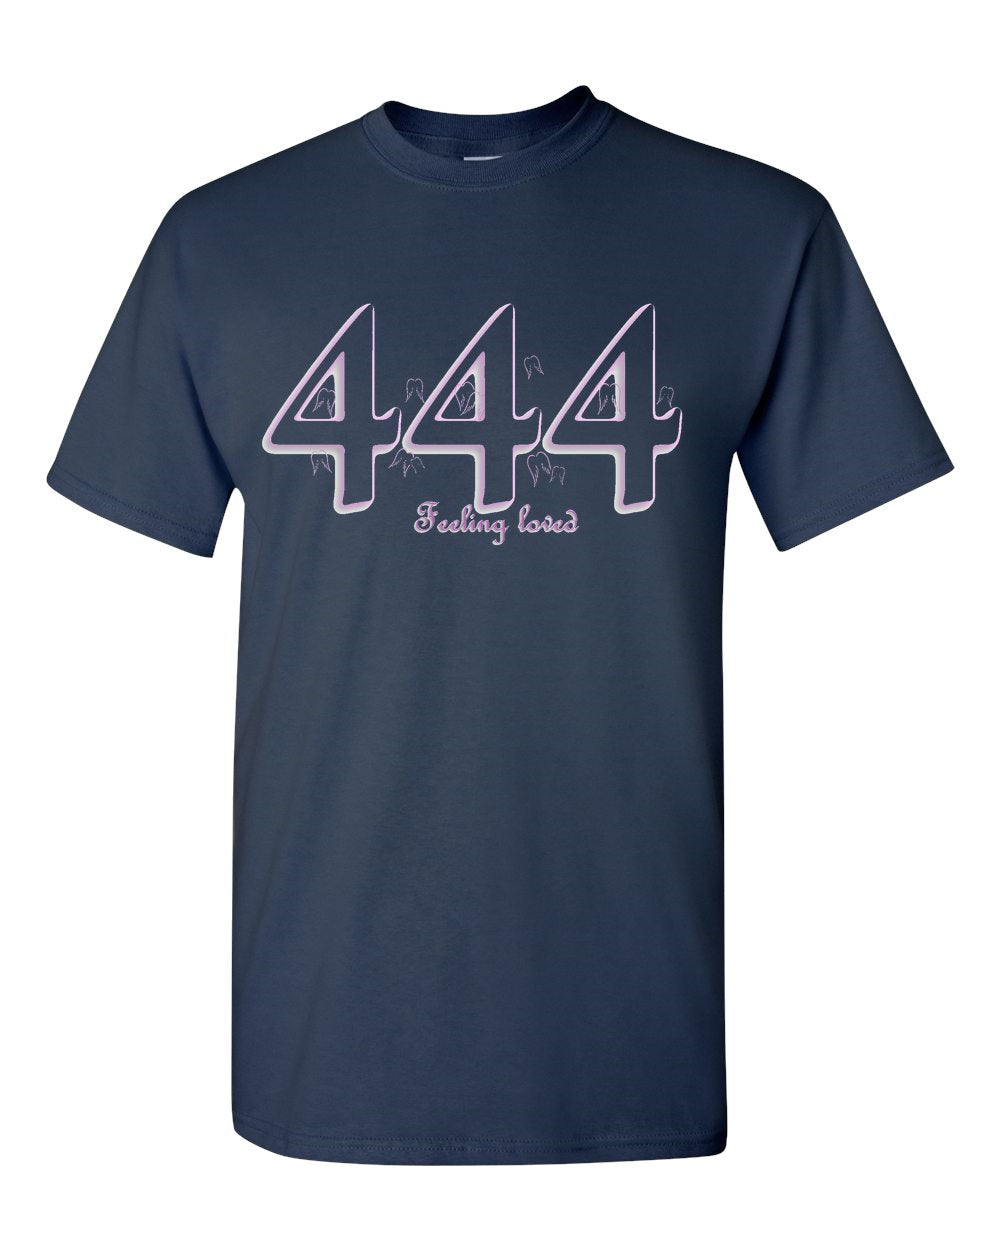 444 T-shirt | Angel Numbers | Spiritual Guide Angel numbers 4 | 44 | 444 |